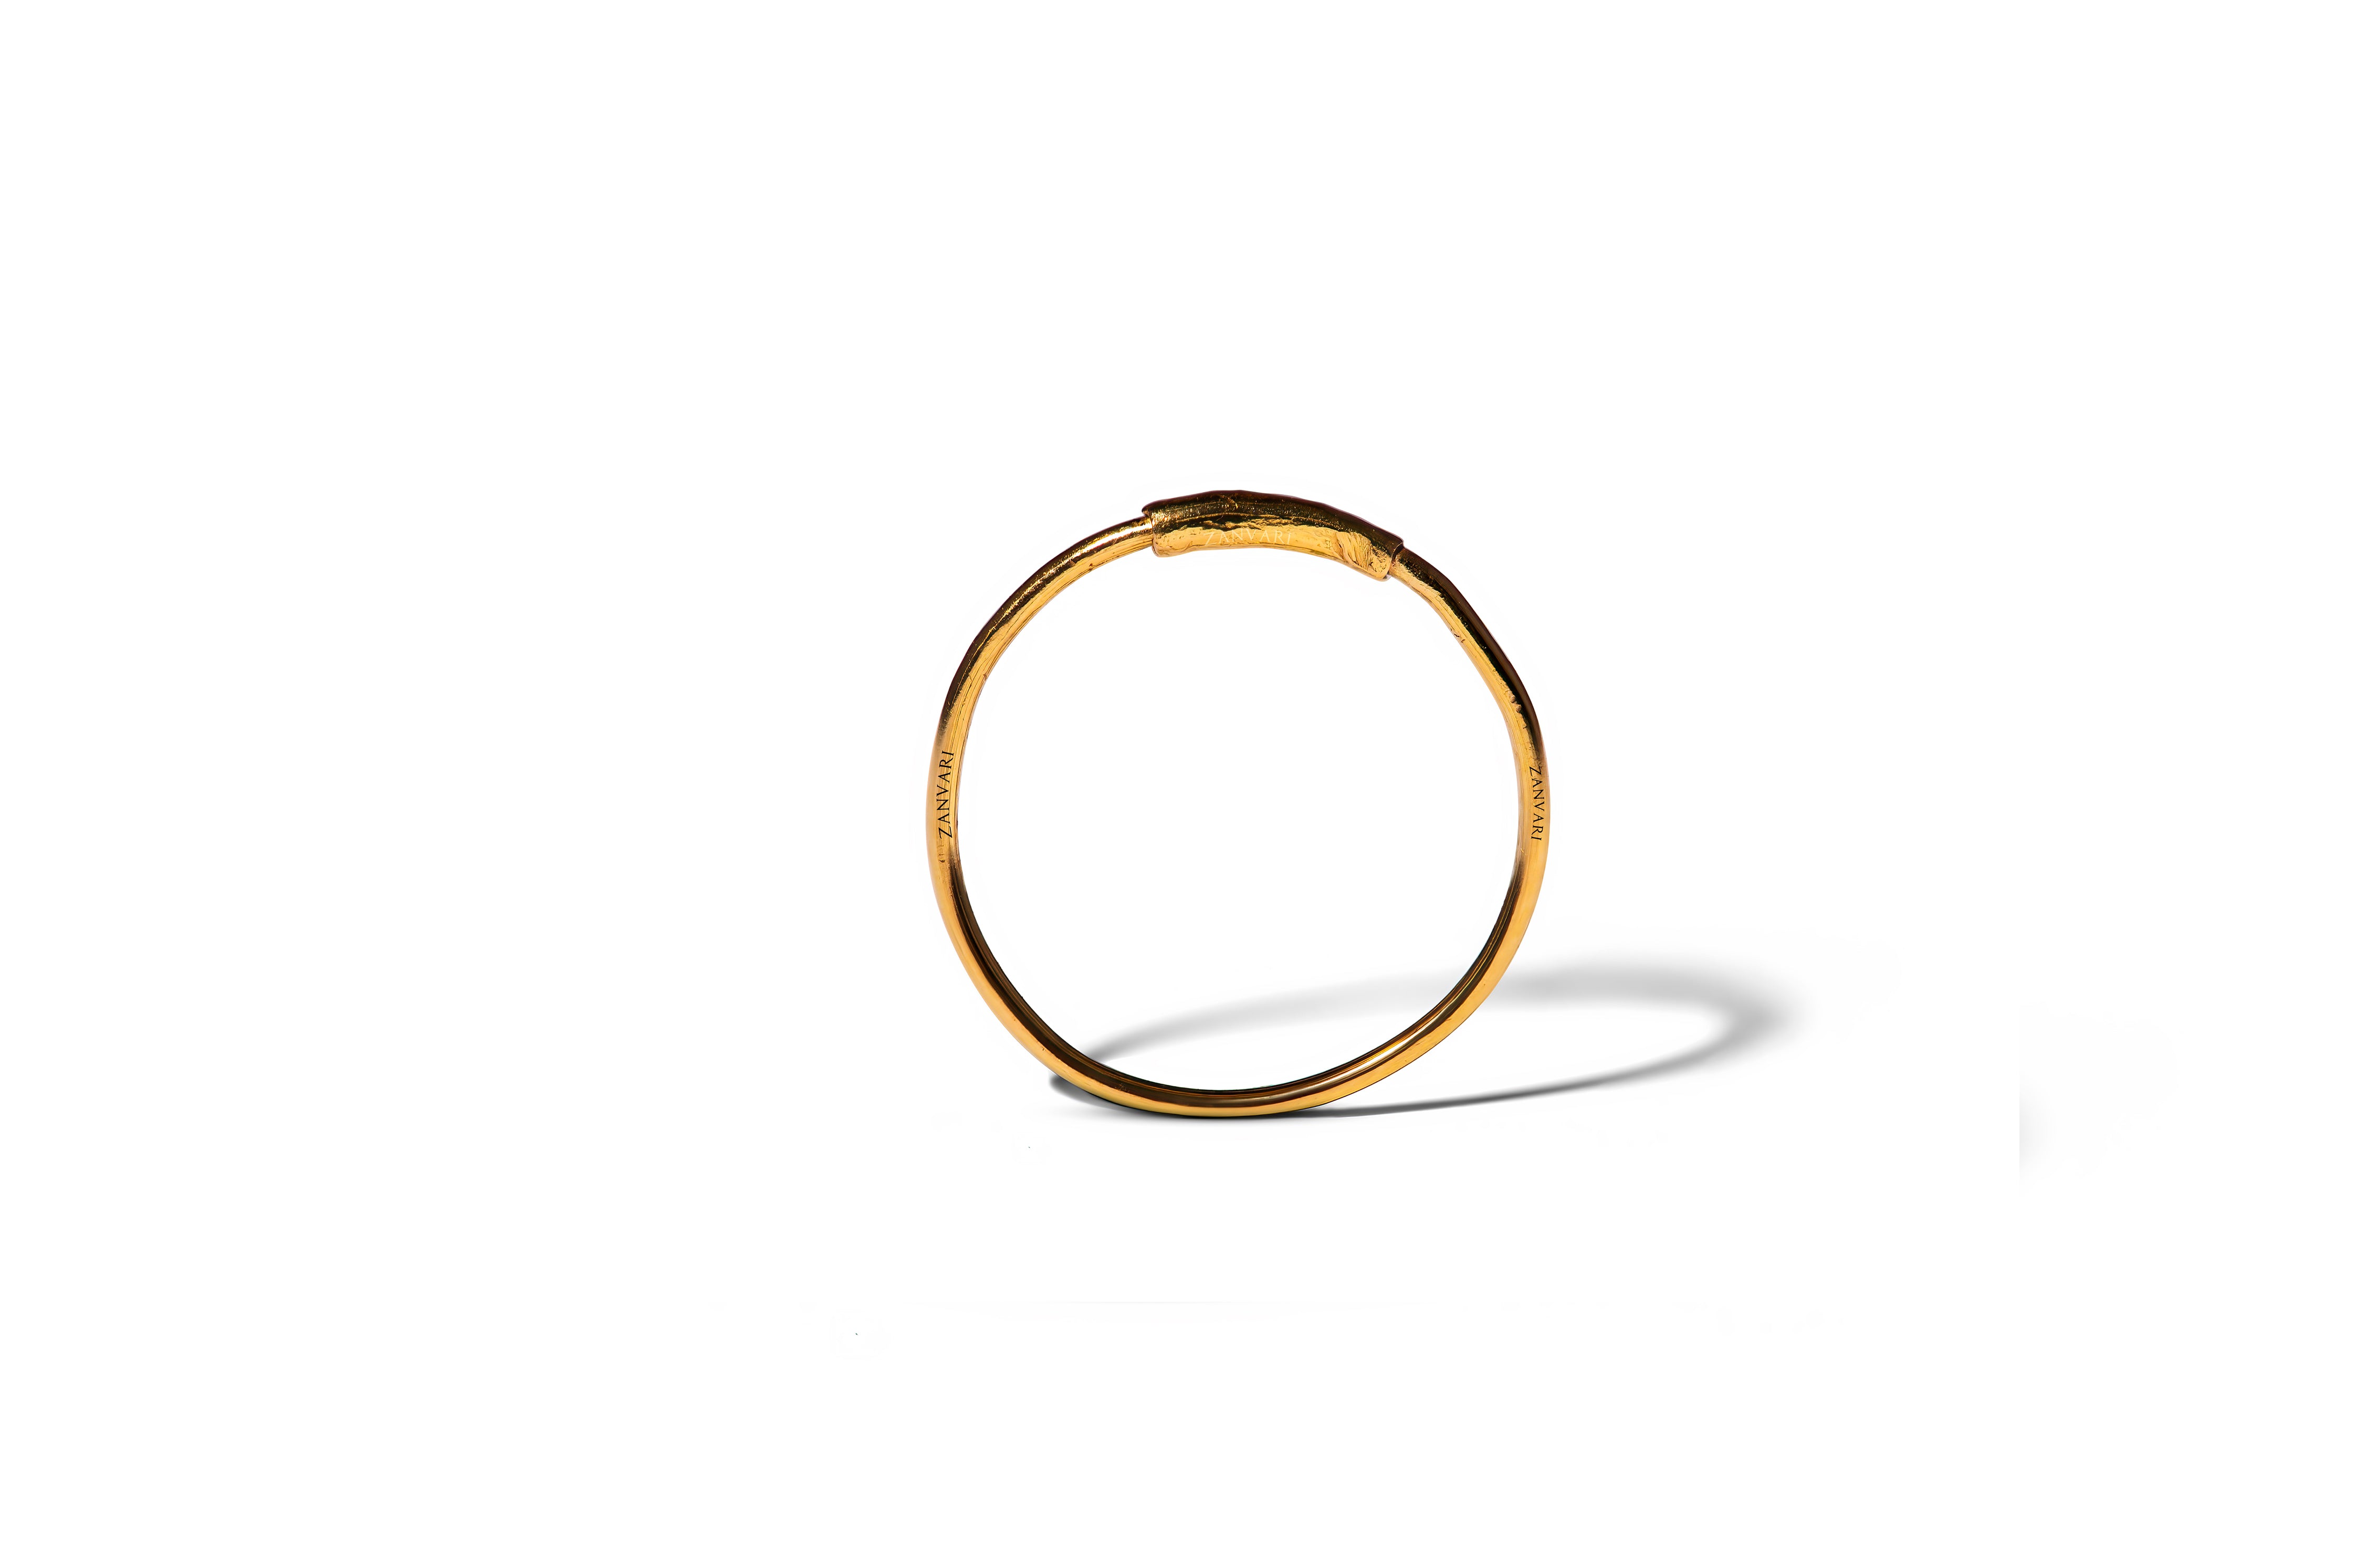 2 Gram Gold Nose Ring Price Sale - www.bridgepartnersllc.com 1692791764